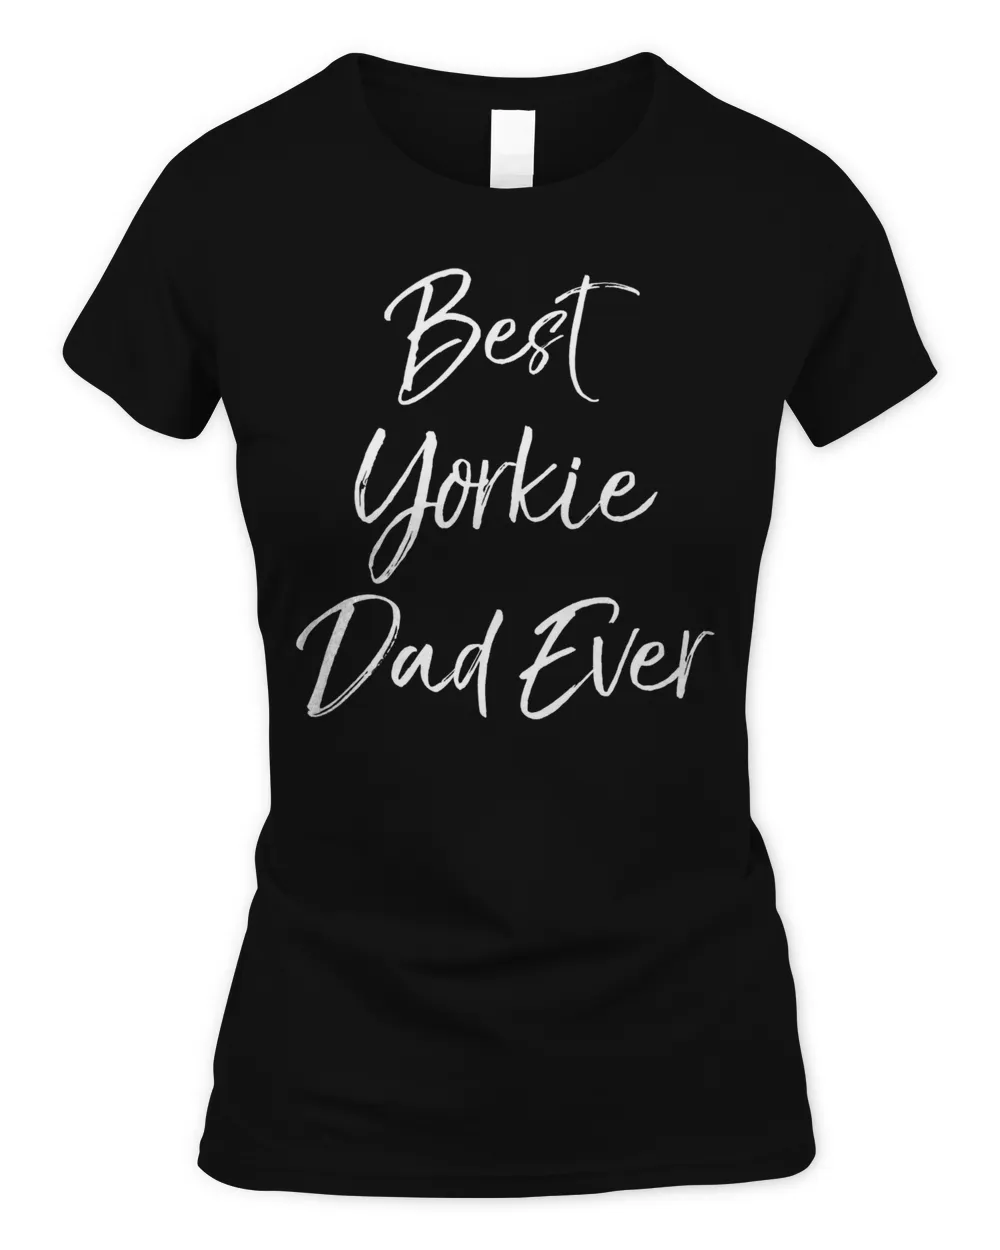 Yorkshire Terrier Owner Gift for Men Best Yorkie Dad Ever Sweatshirt